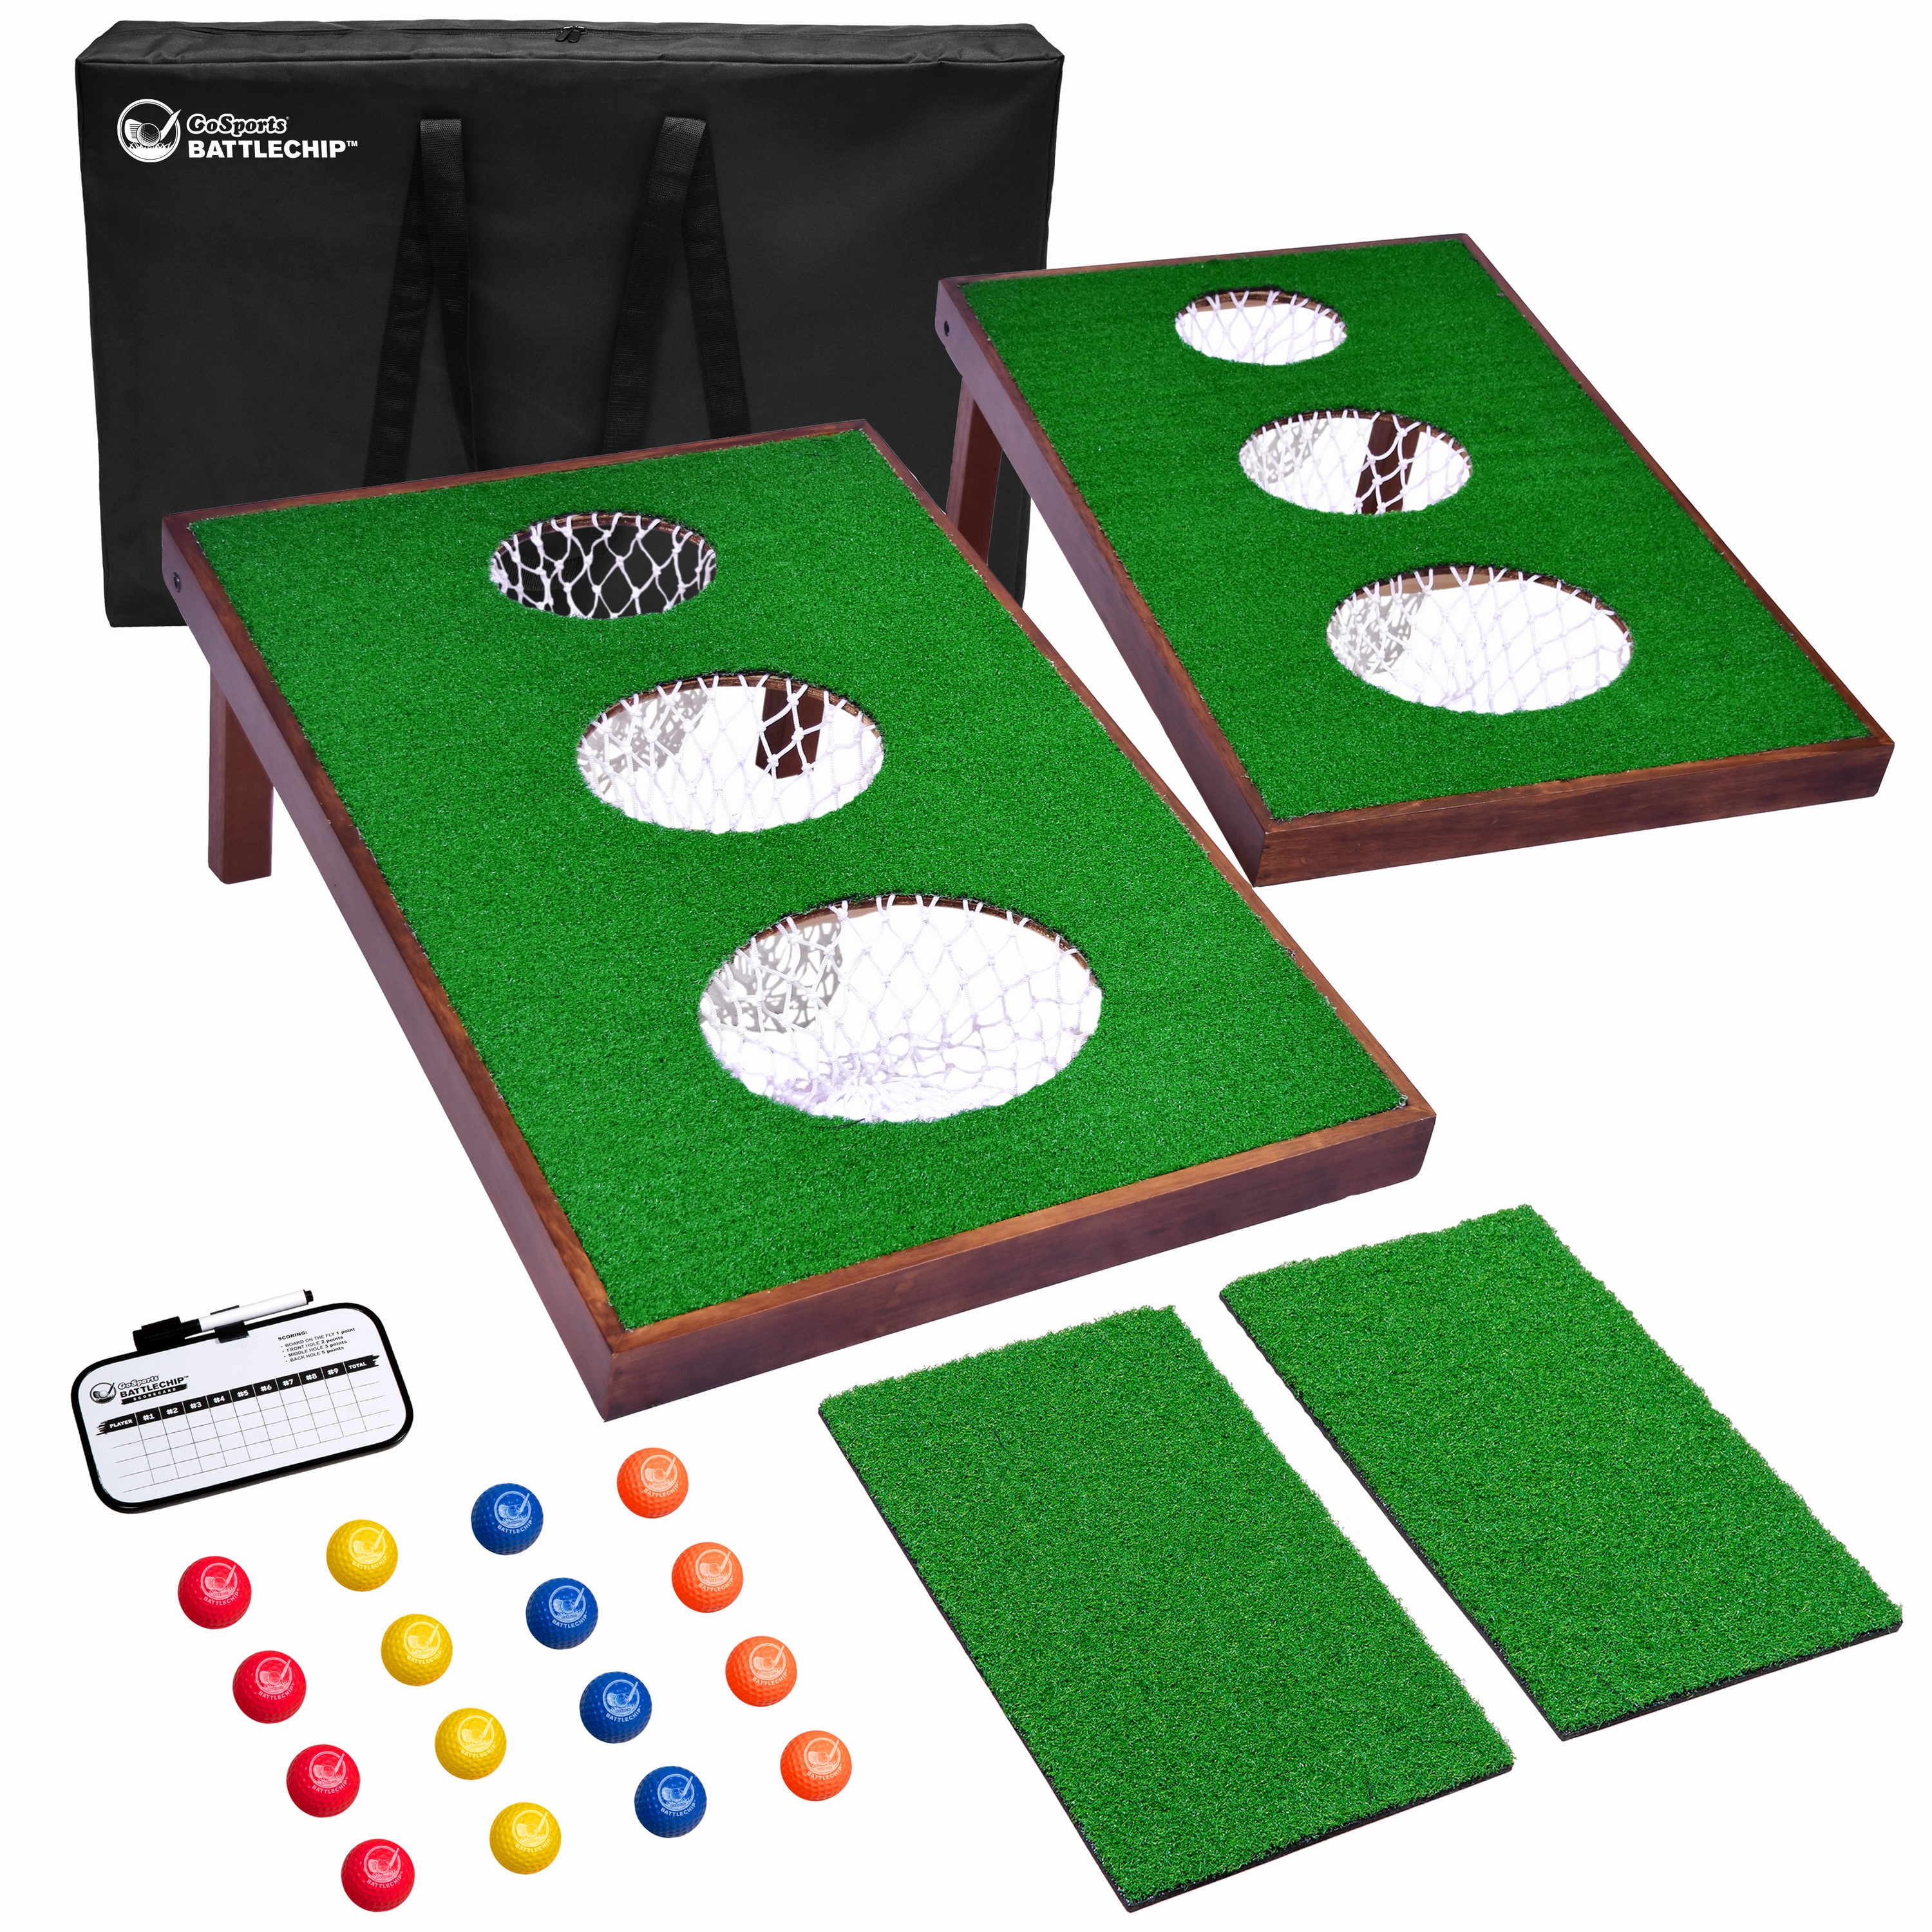 GoSports Golf Simulator - BATTLECHIP: Golf and Cornhole Hybrid